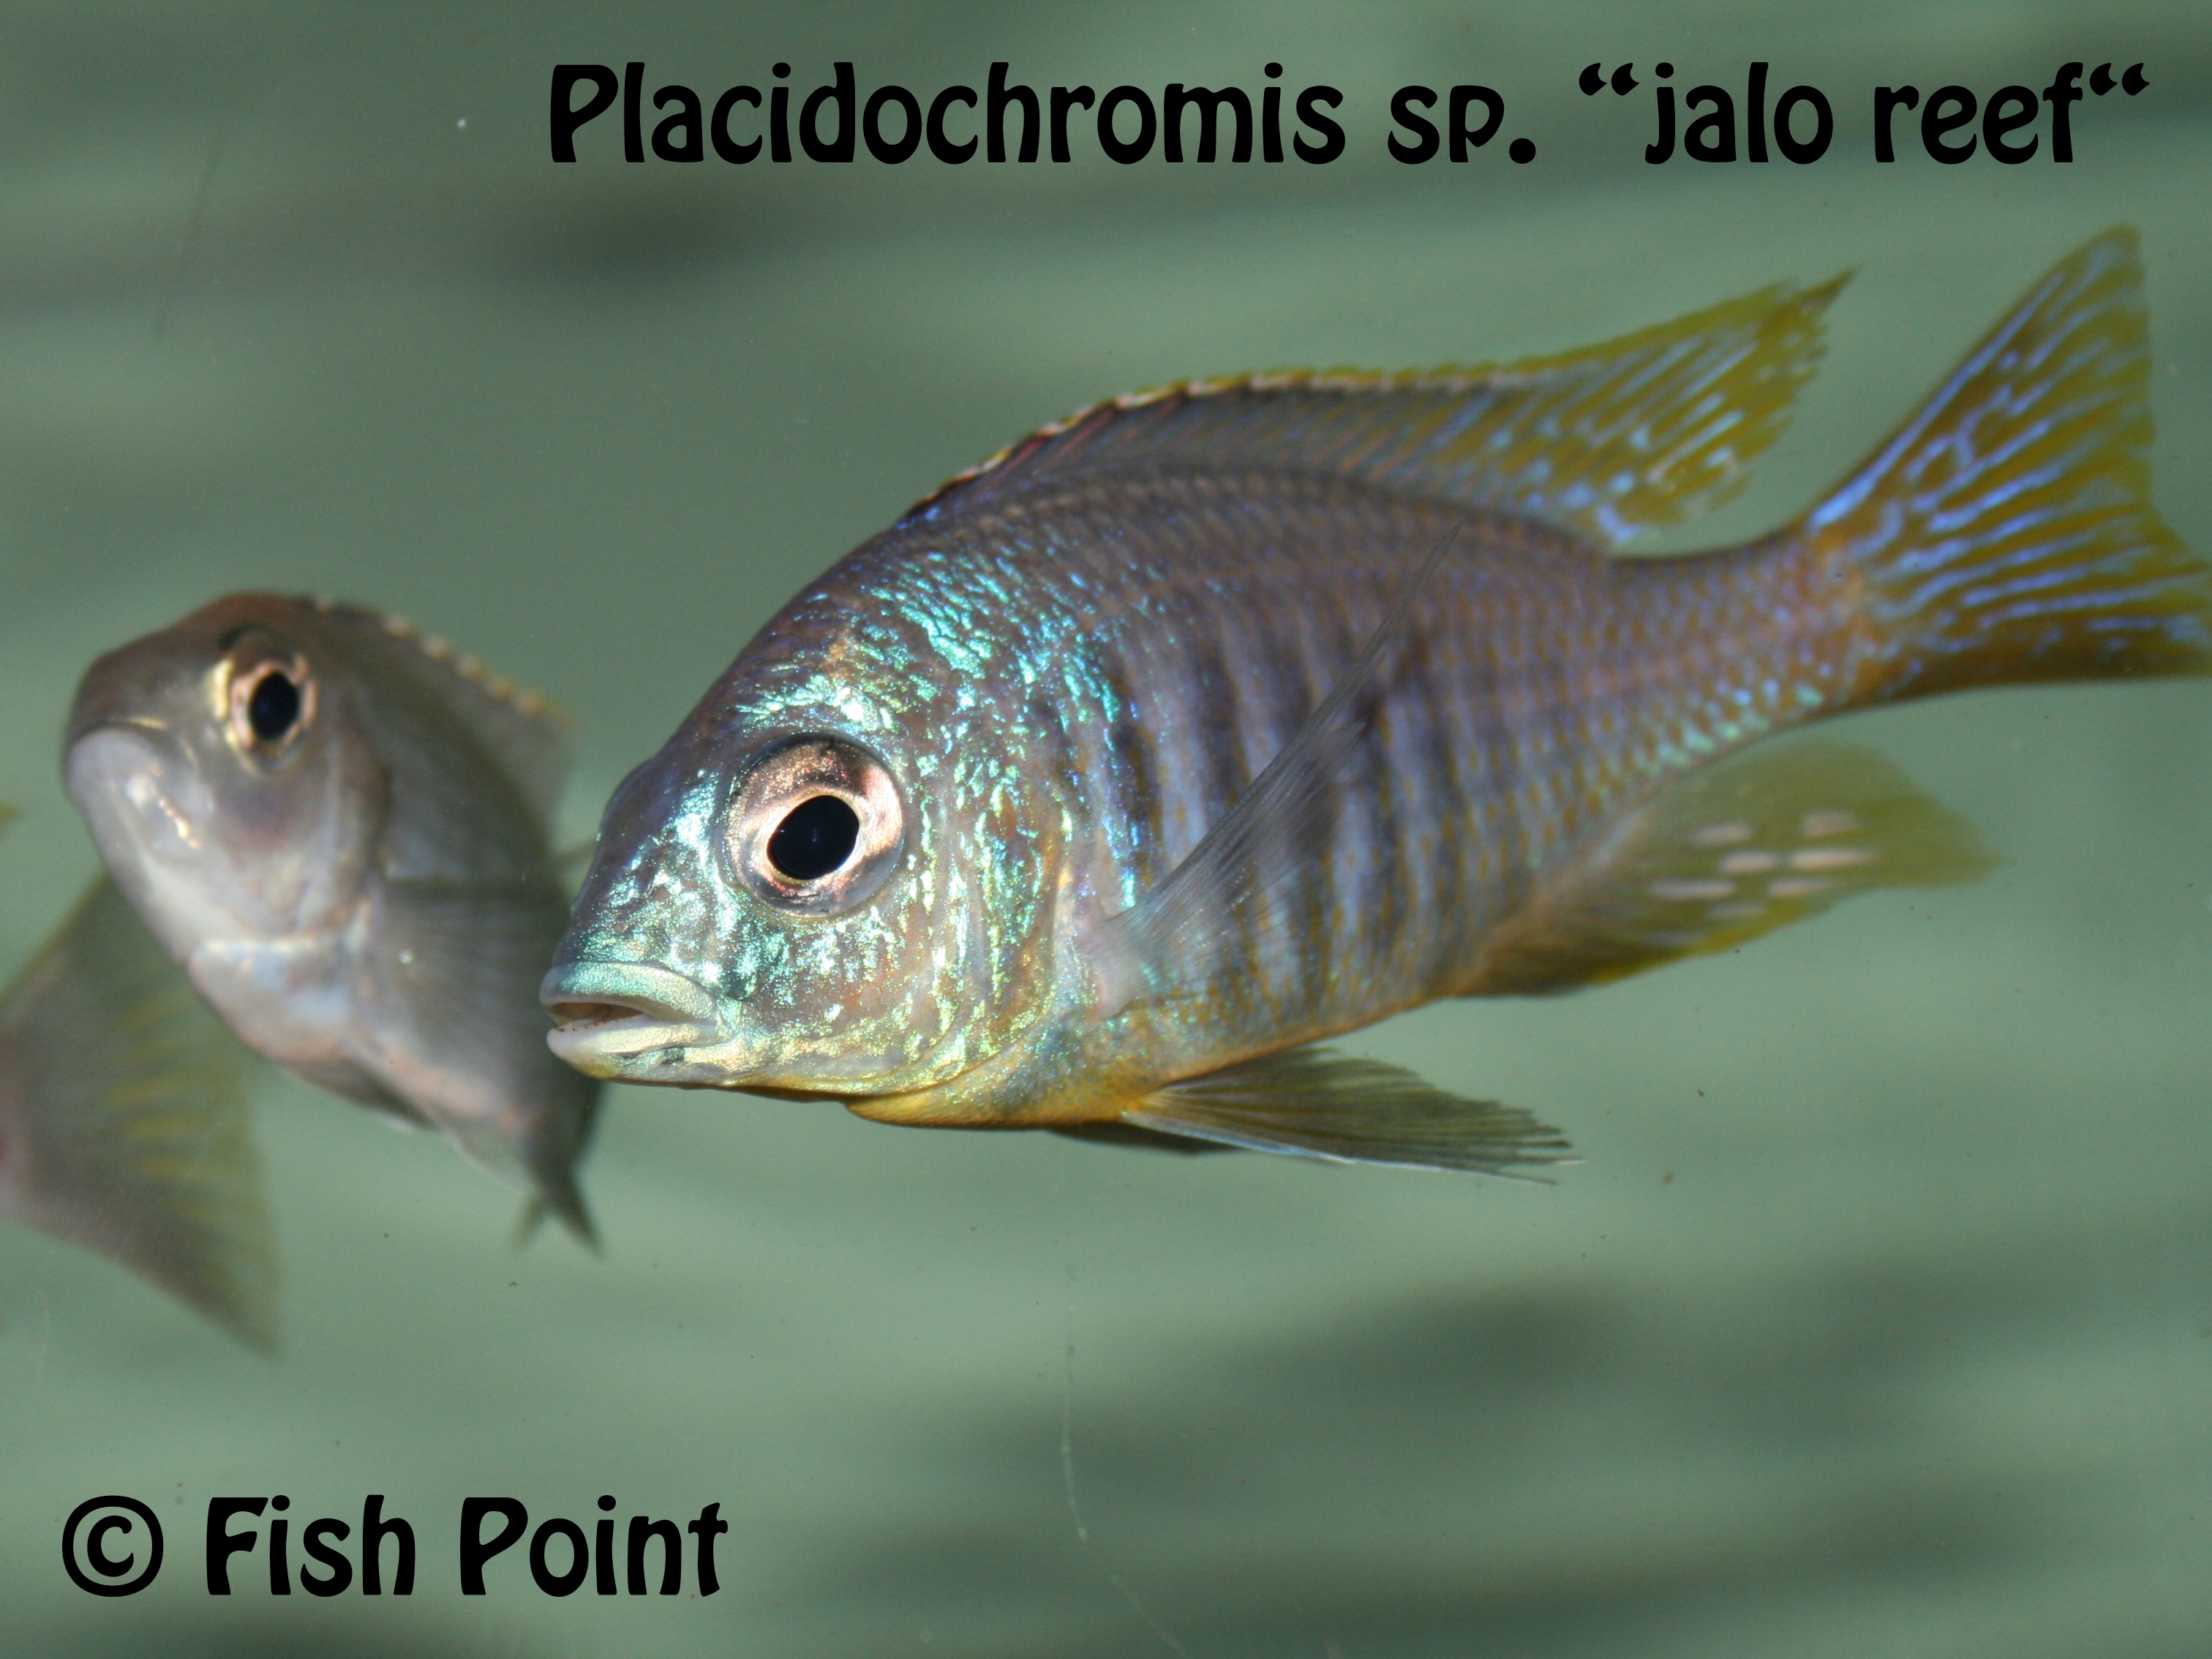 Placidochromis sp. jalo reef